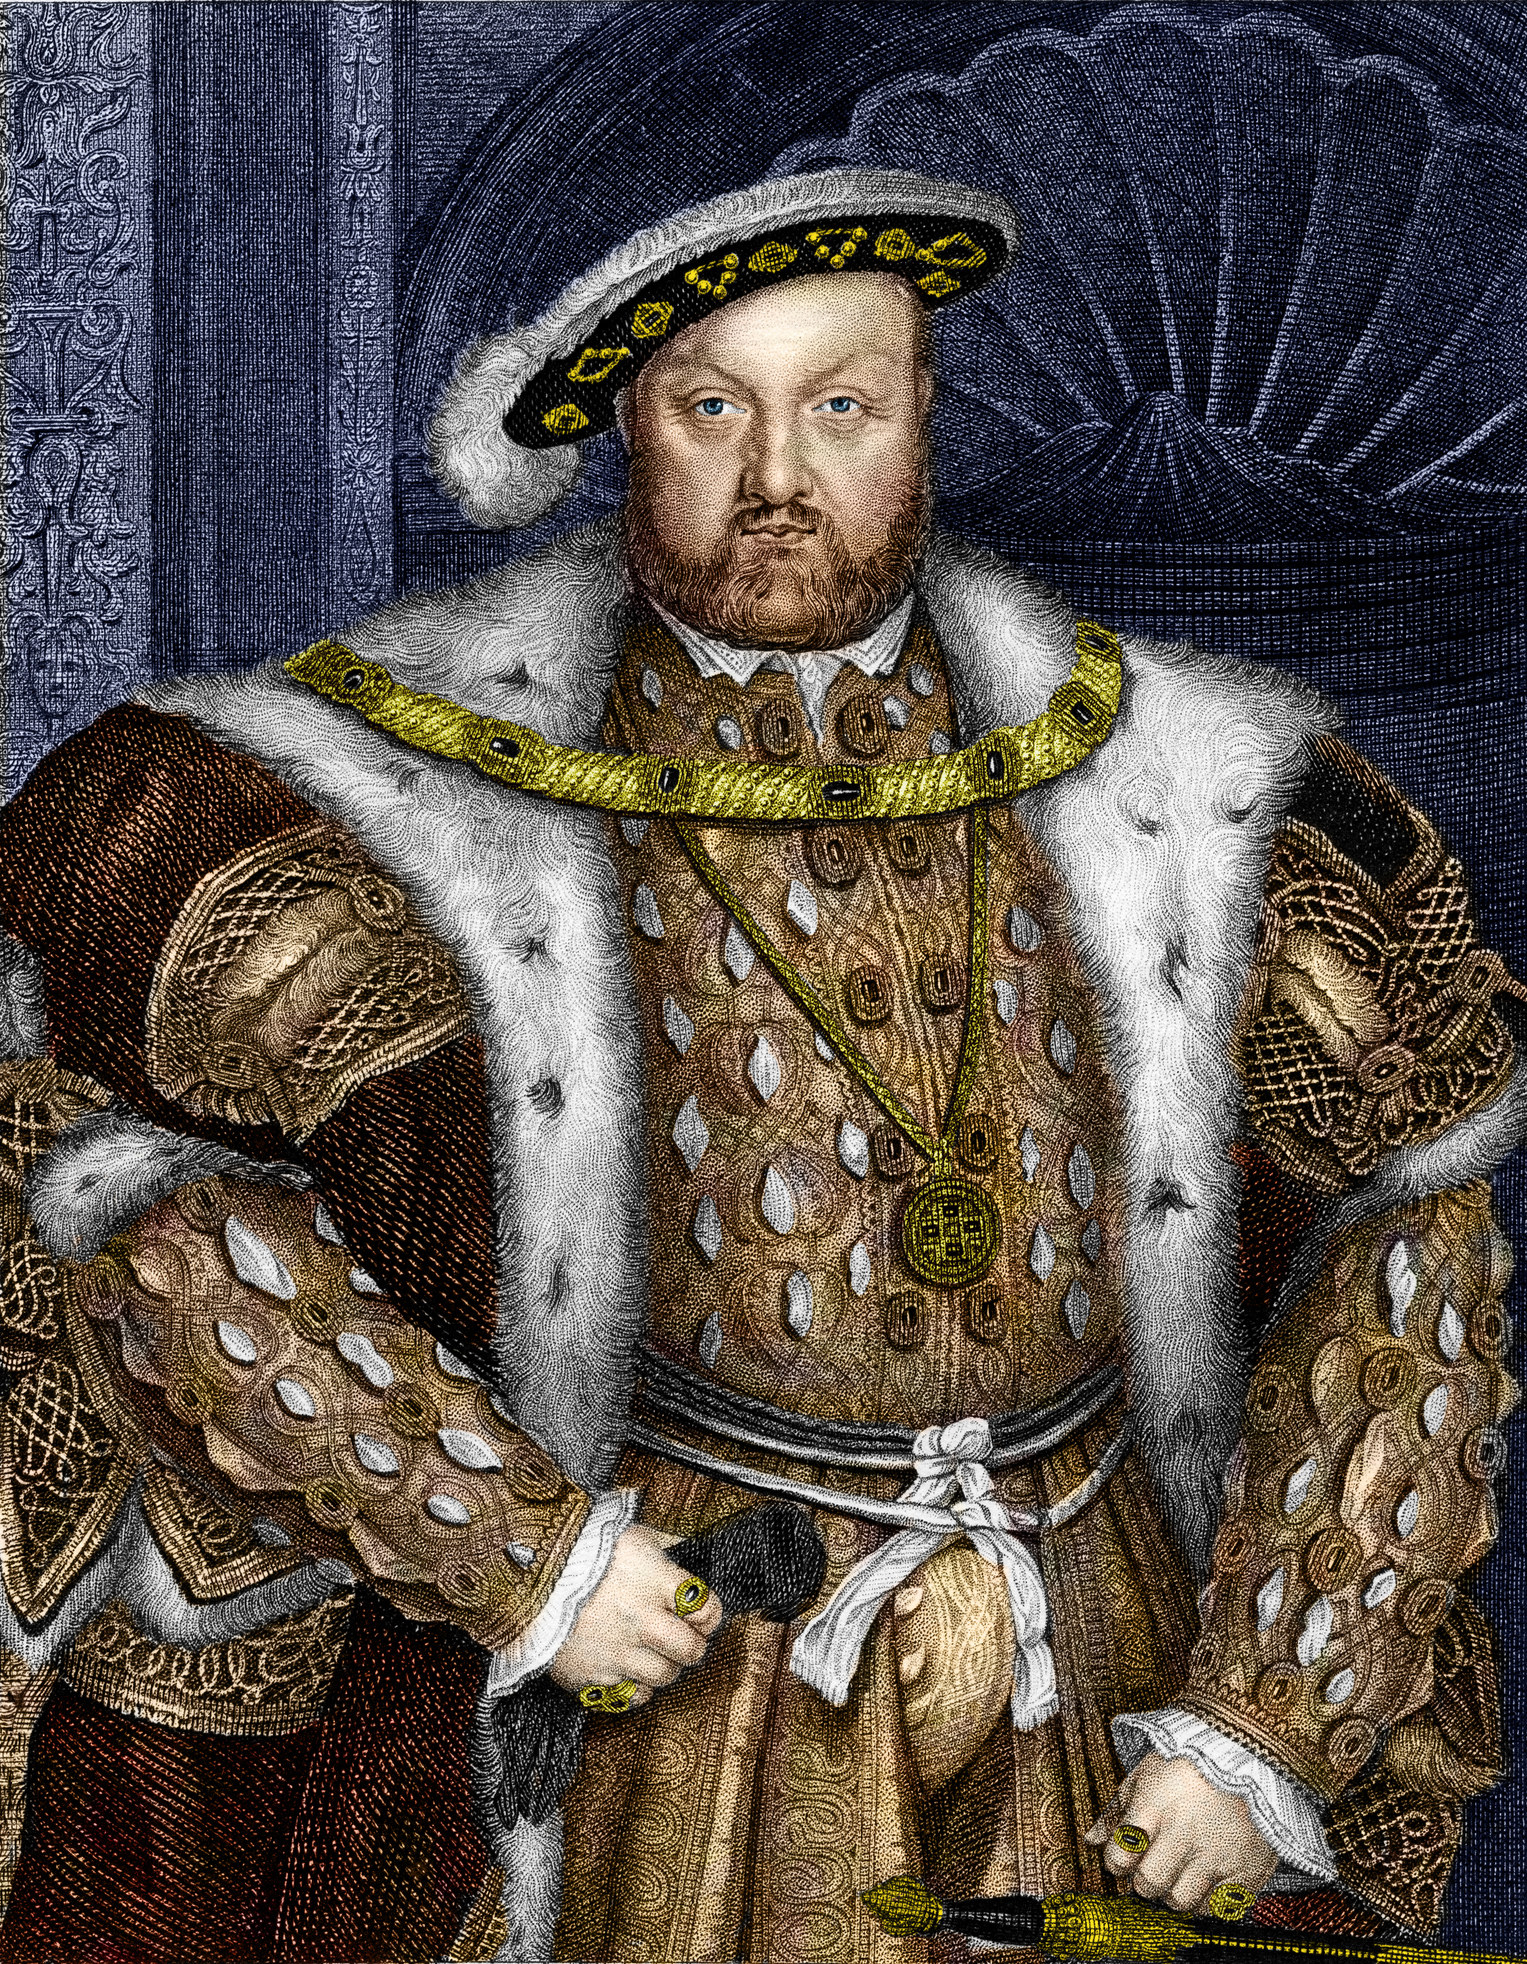 King Henry VIII holding his gloves